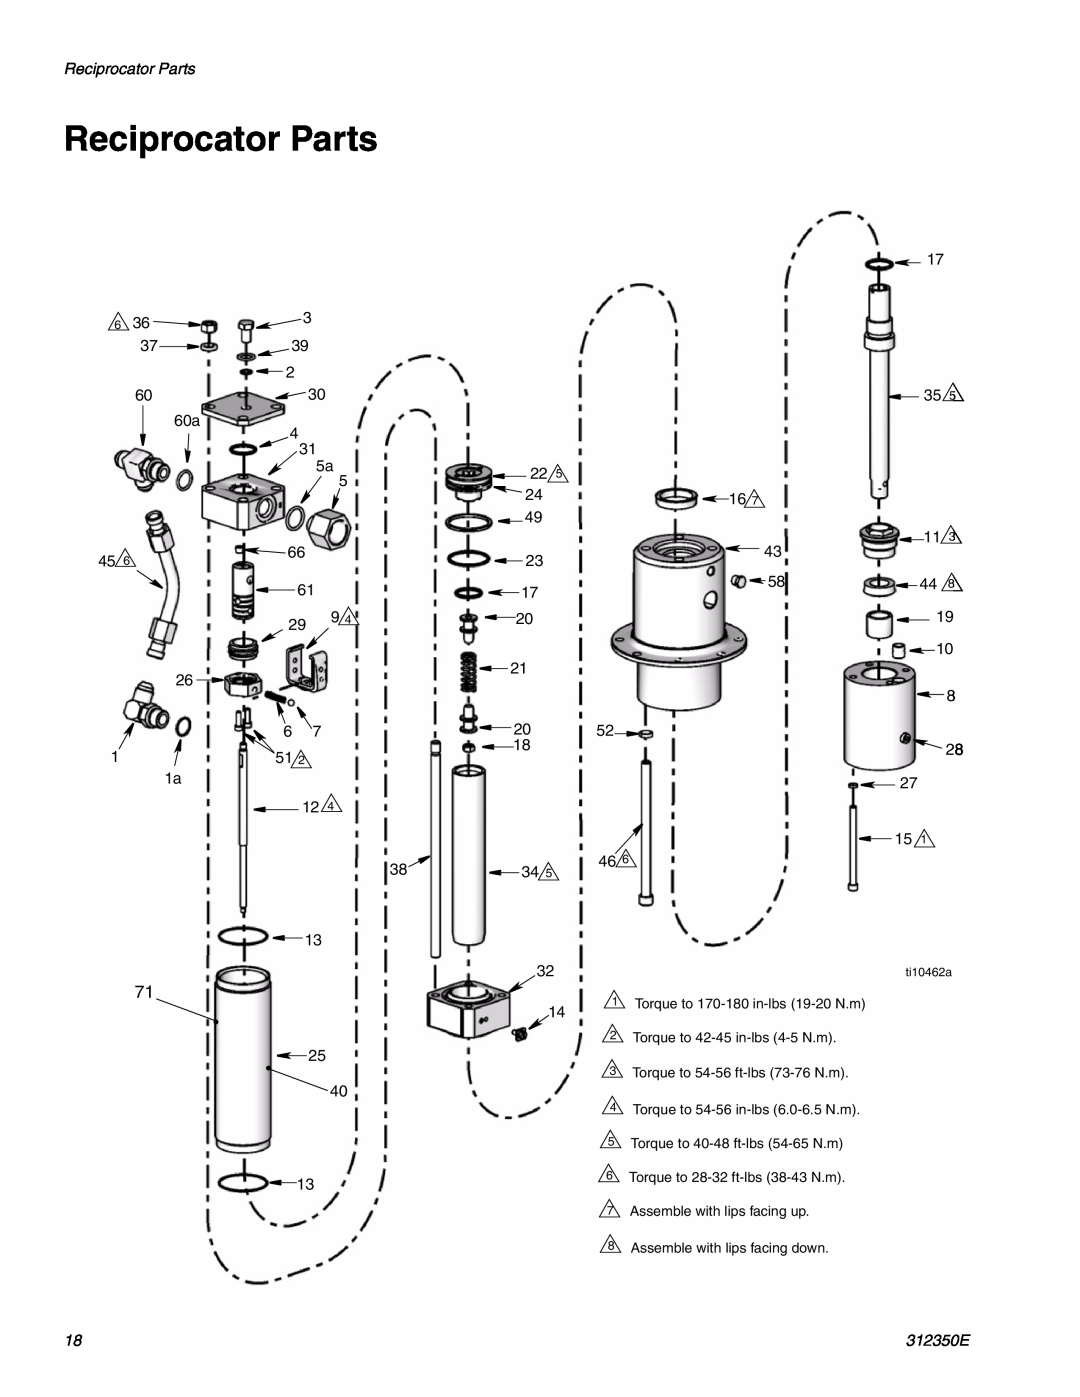 Hitachi 312350E important safety instructions Reciprocator Parts, ti10462a 